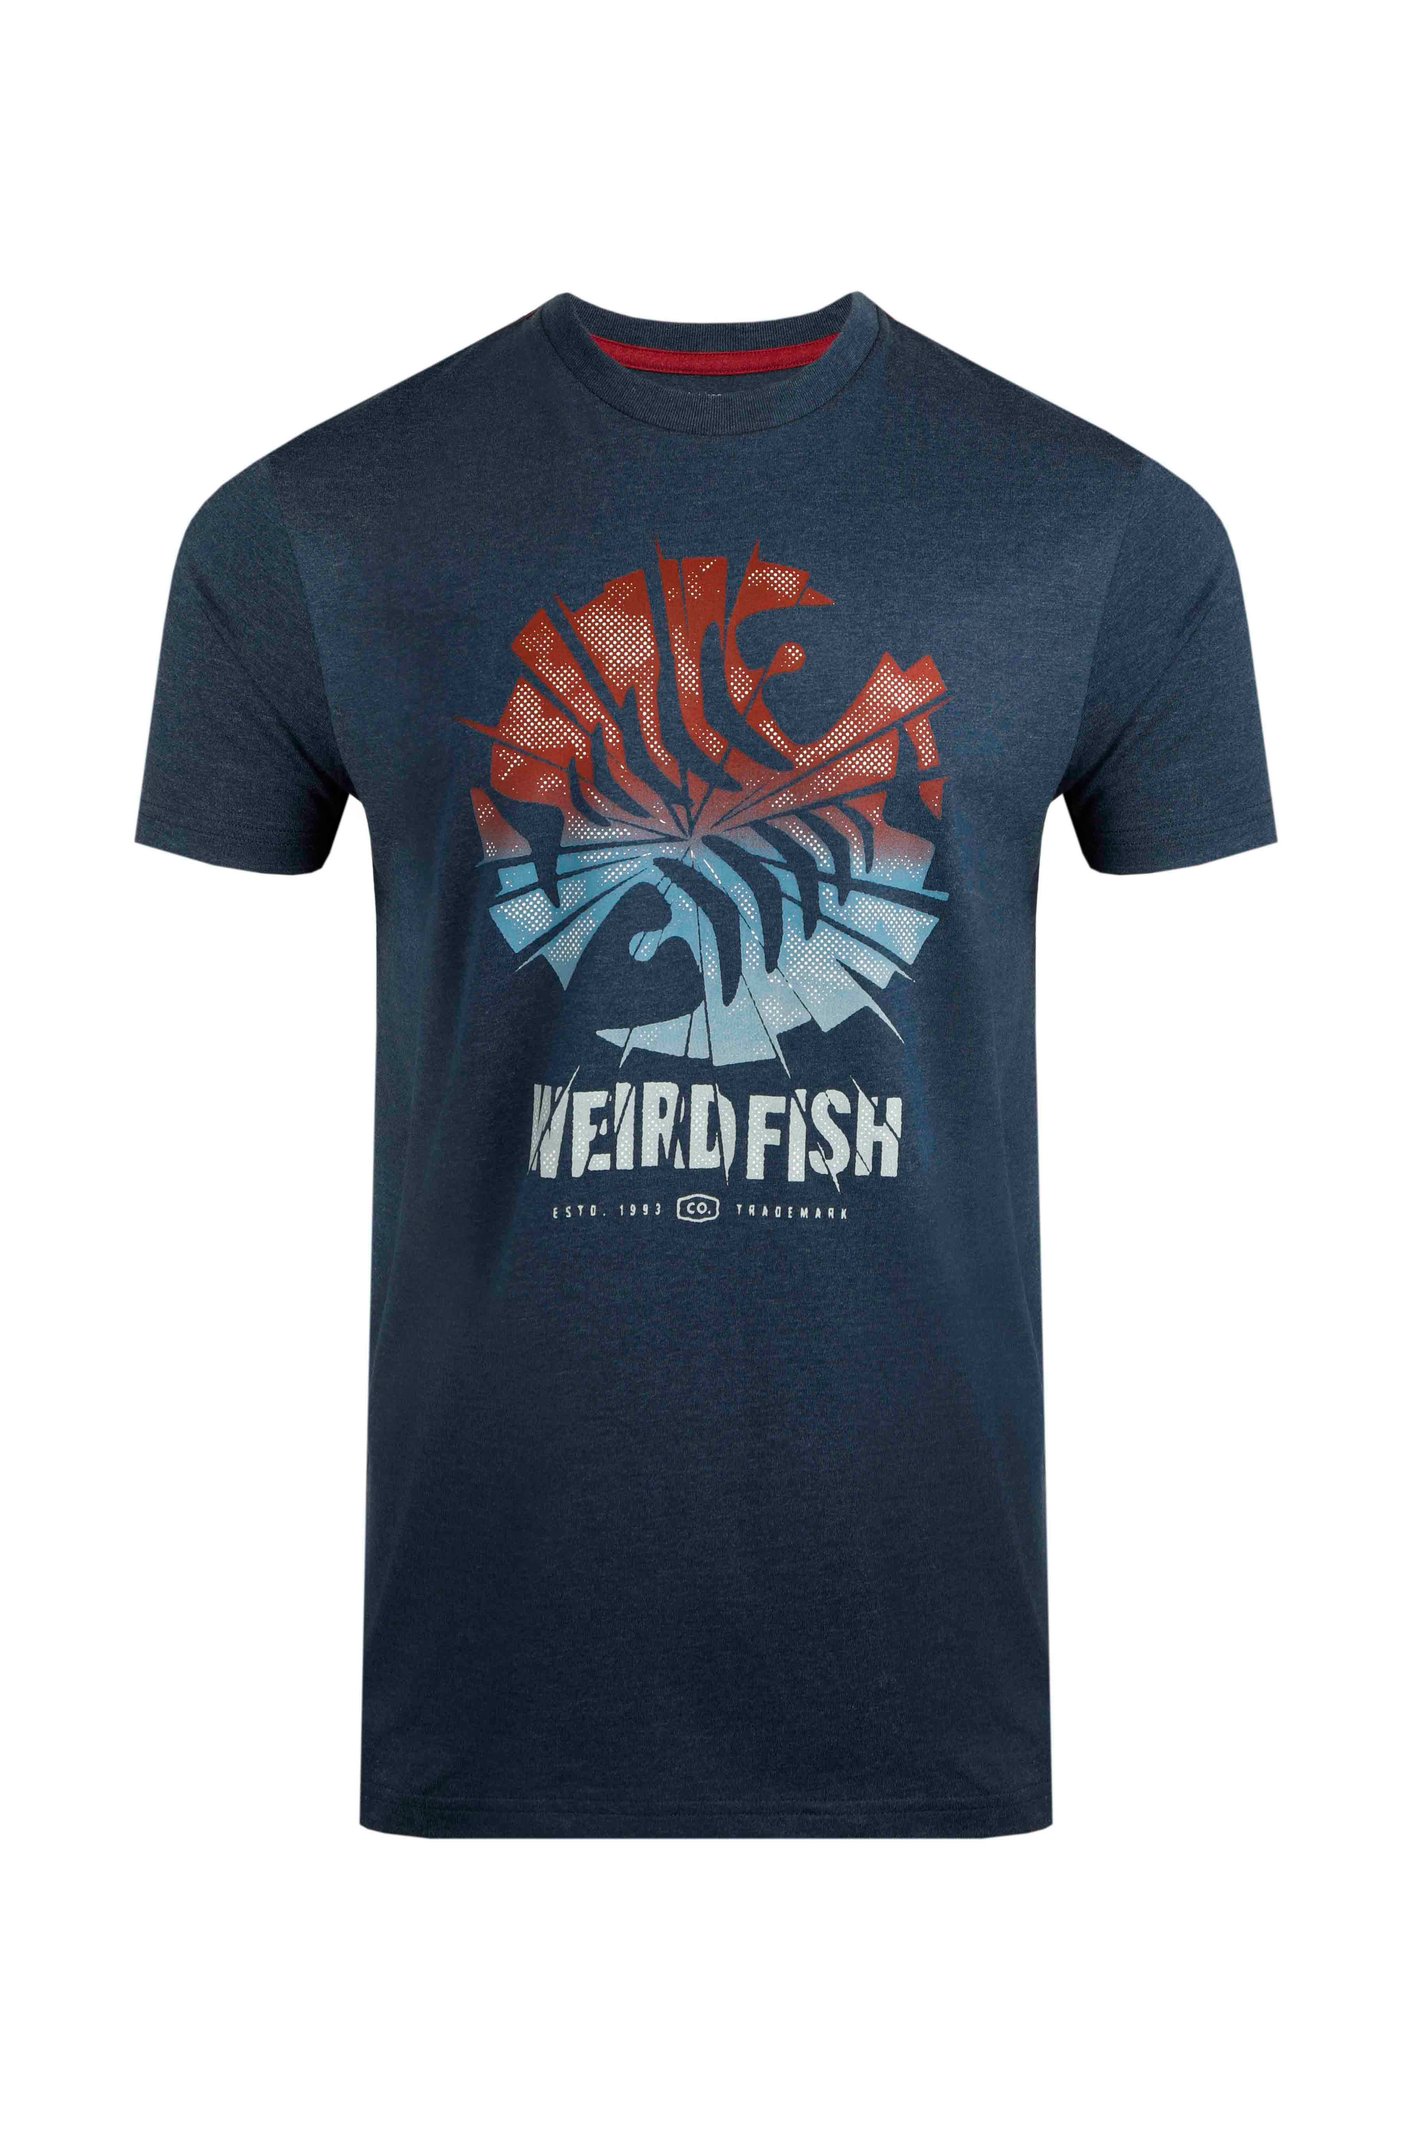 Weird Fish Shatter Graphic T-Shirt Federal Blue Size L